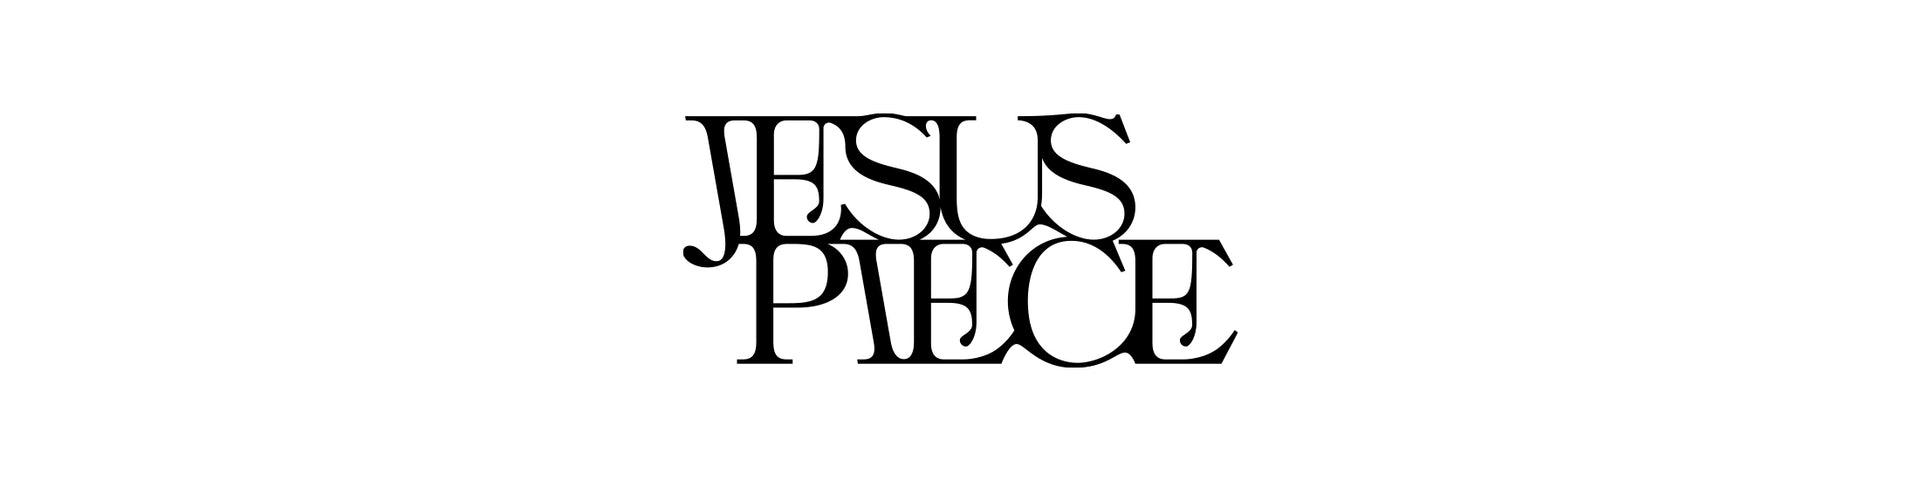 Shop – Jesus Piece – Band & Music Merch – Cold Cuts Merch